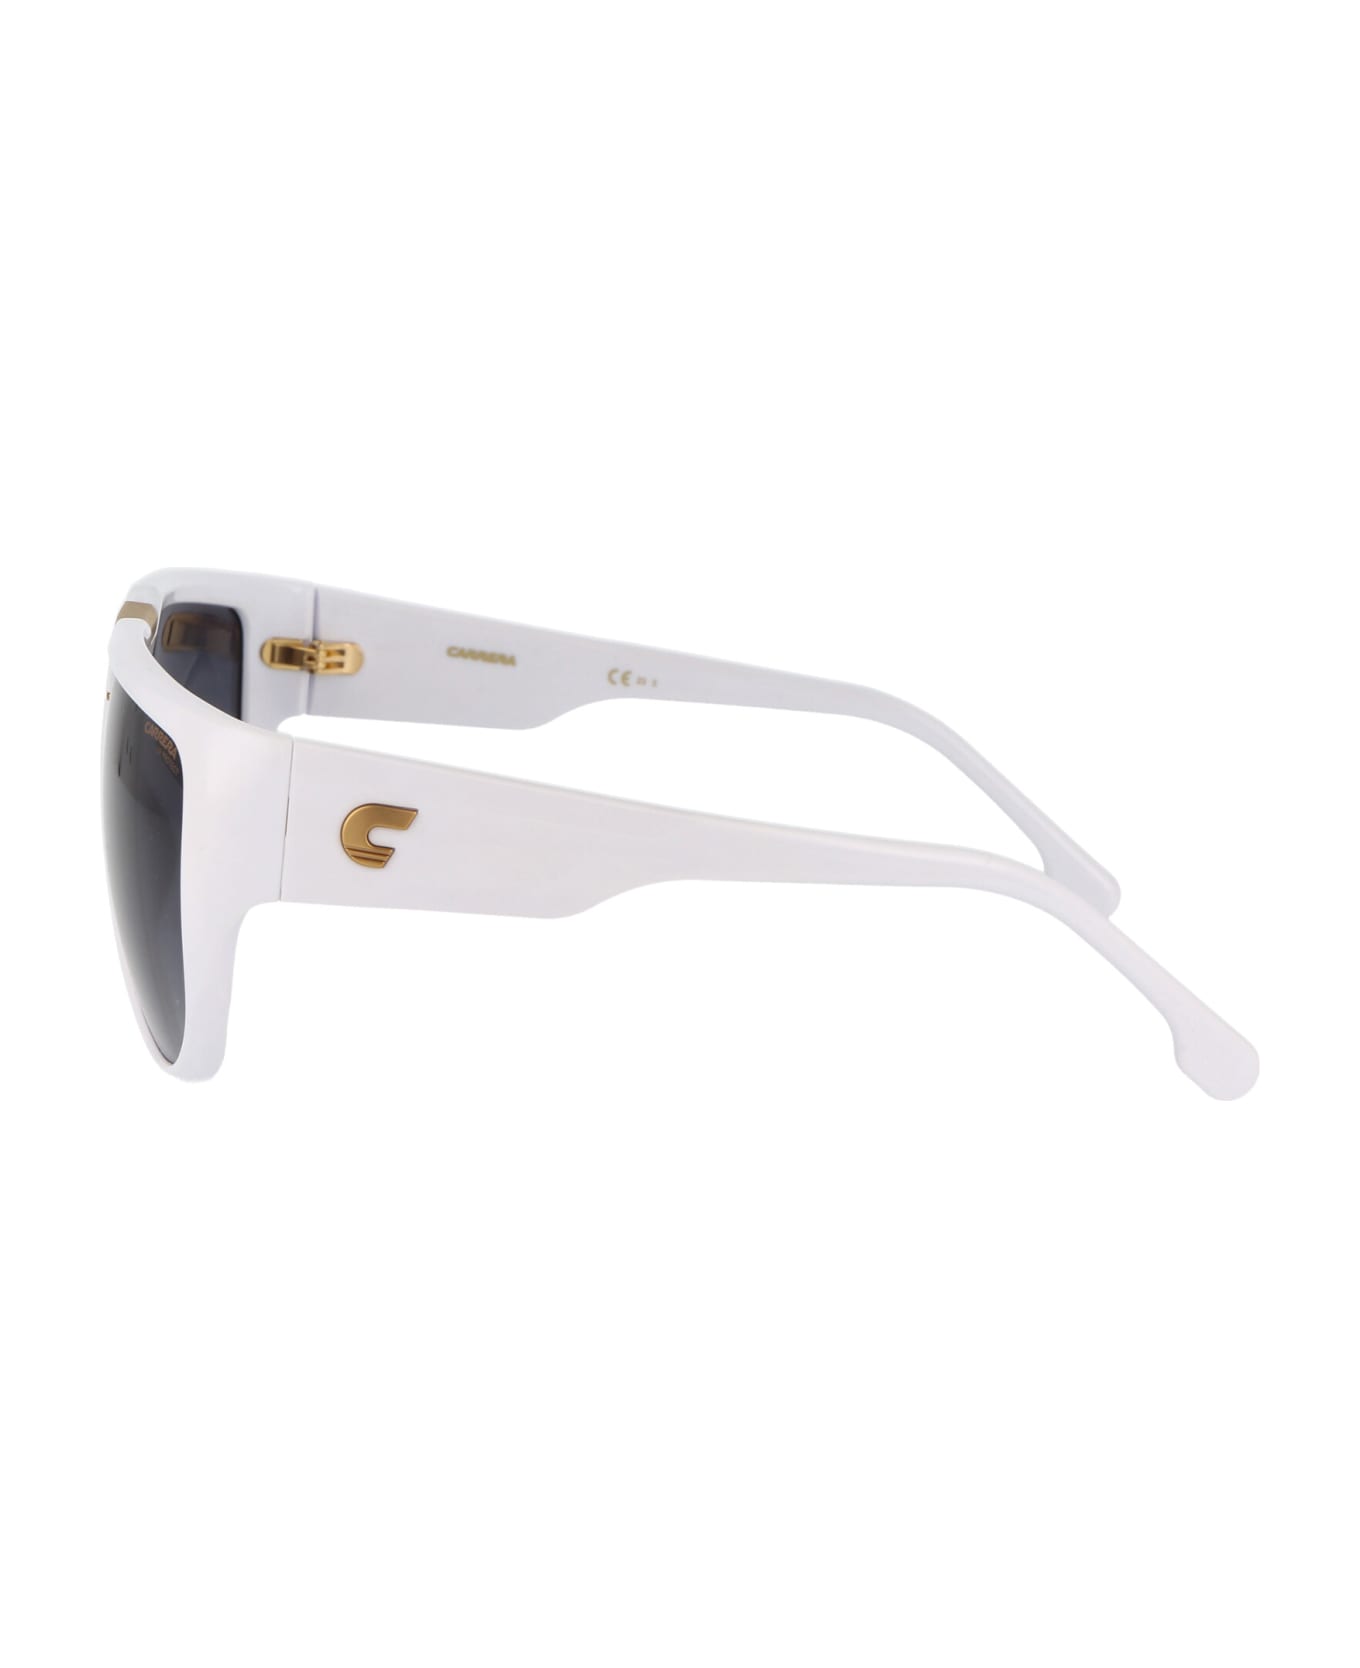 Carrera Flaglab 13 Sunglasses - VK69O BIANCO